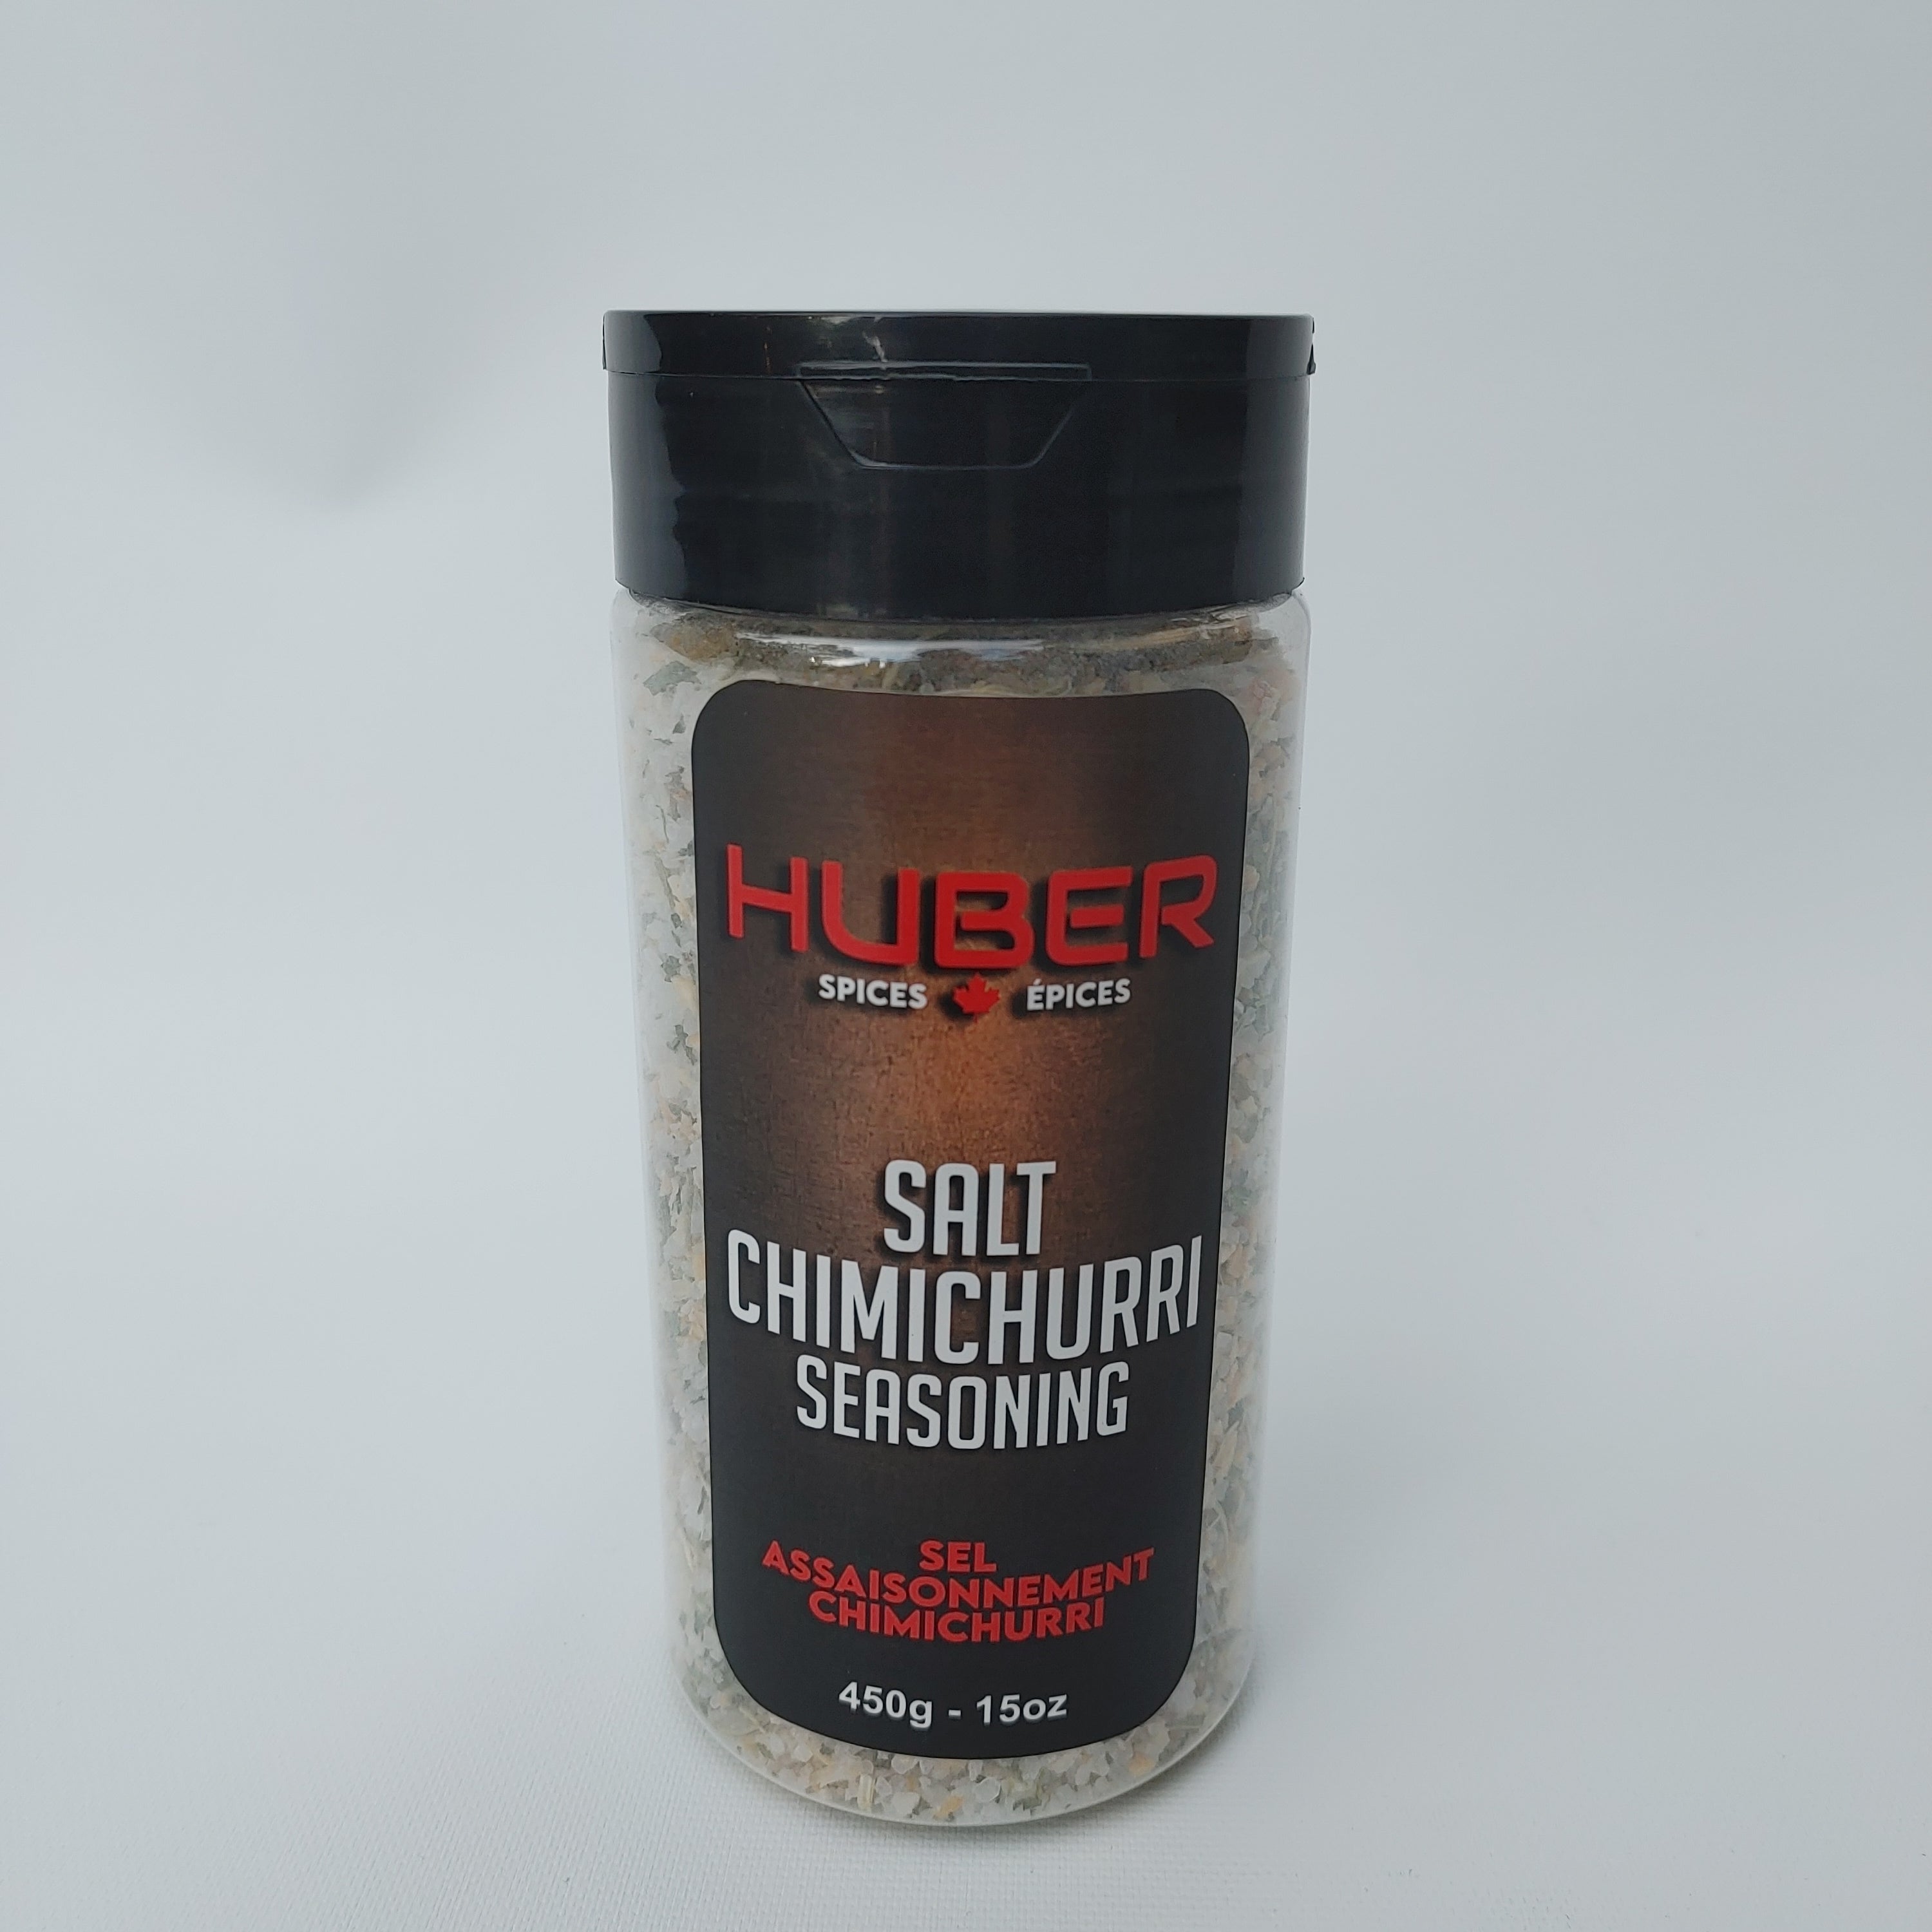 HUBER - Salt Chimichurri Seasoning - FINAL SALE - EXPIRED or CLOSE TO EXPIRY